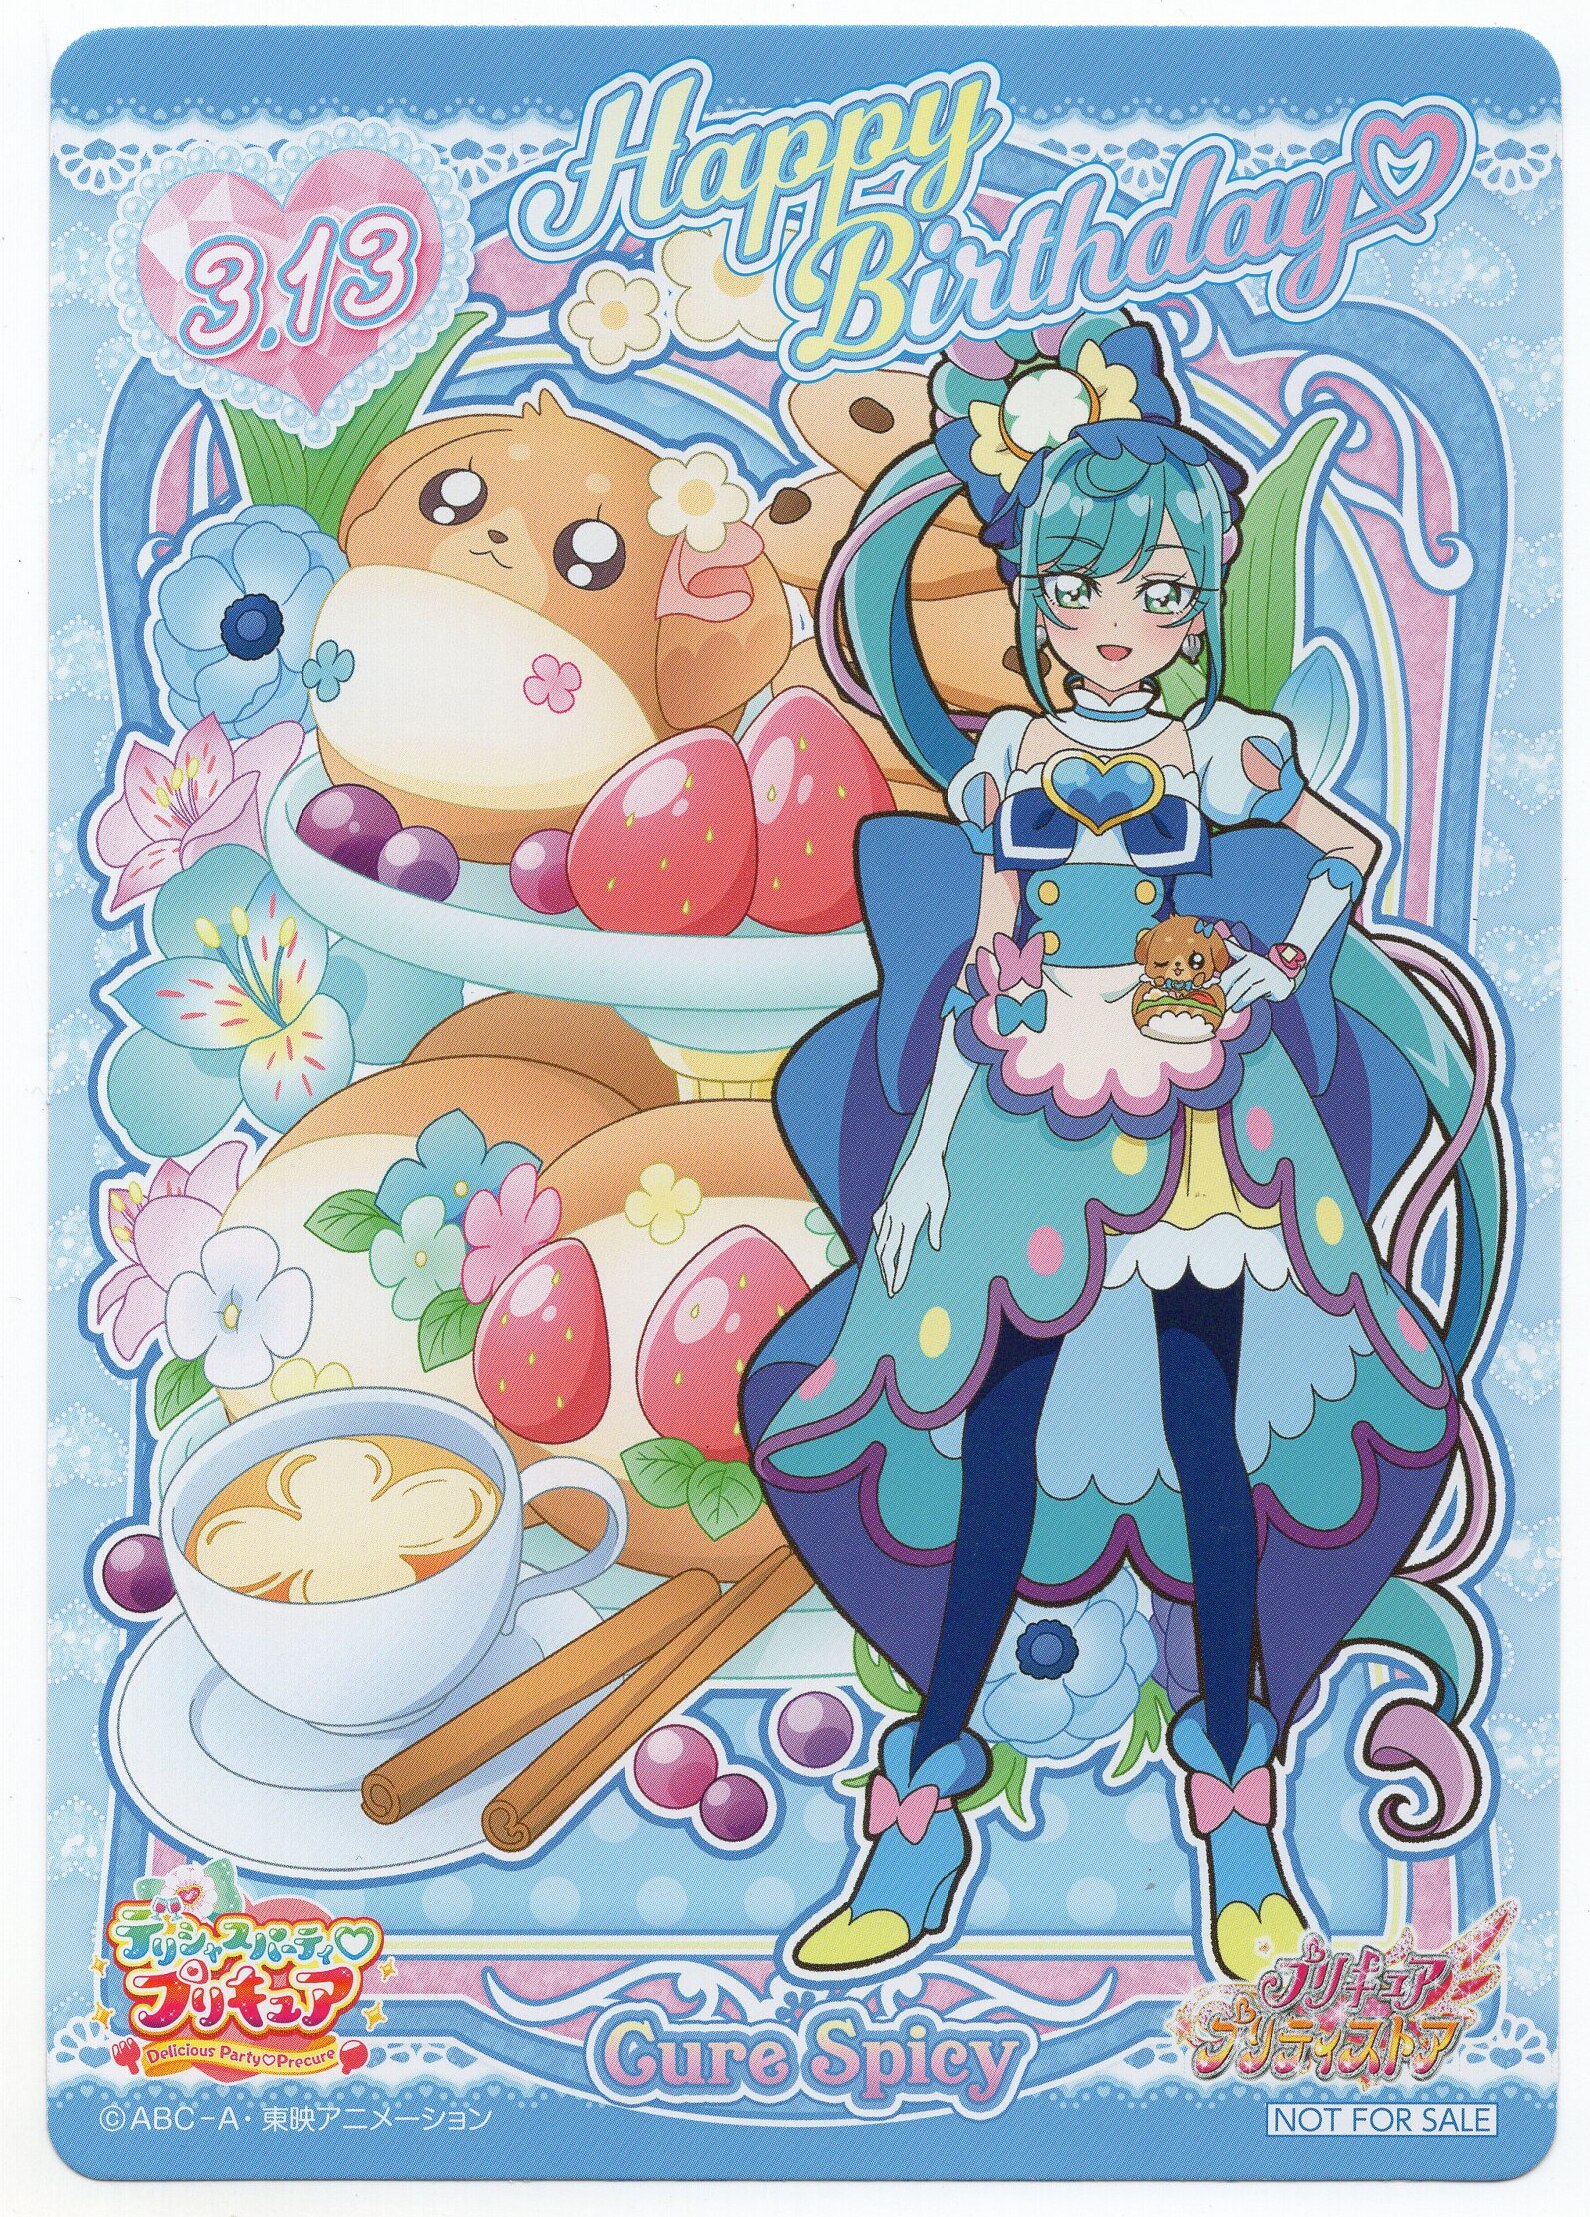  Pretty Cure Illustration Card Fuwa Kokone Marui